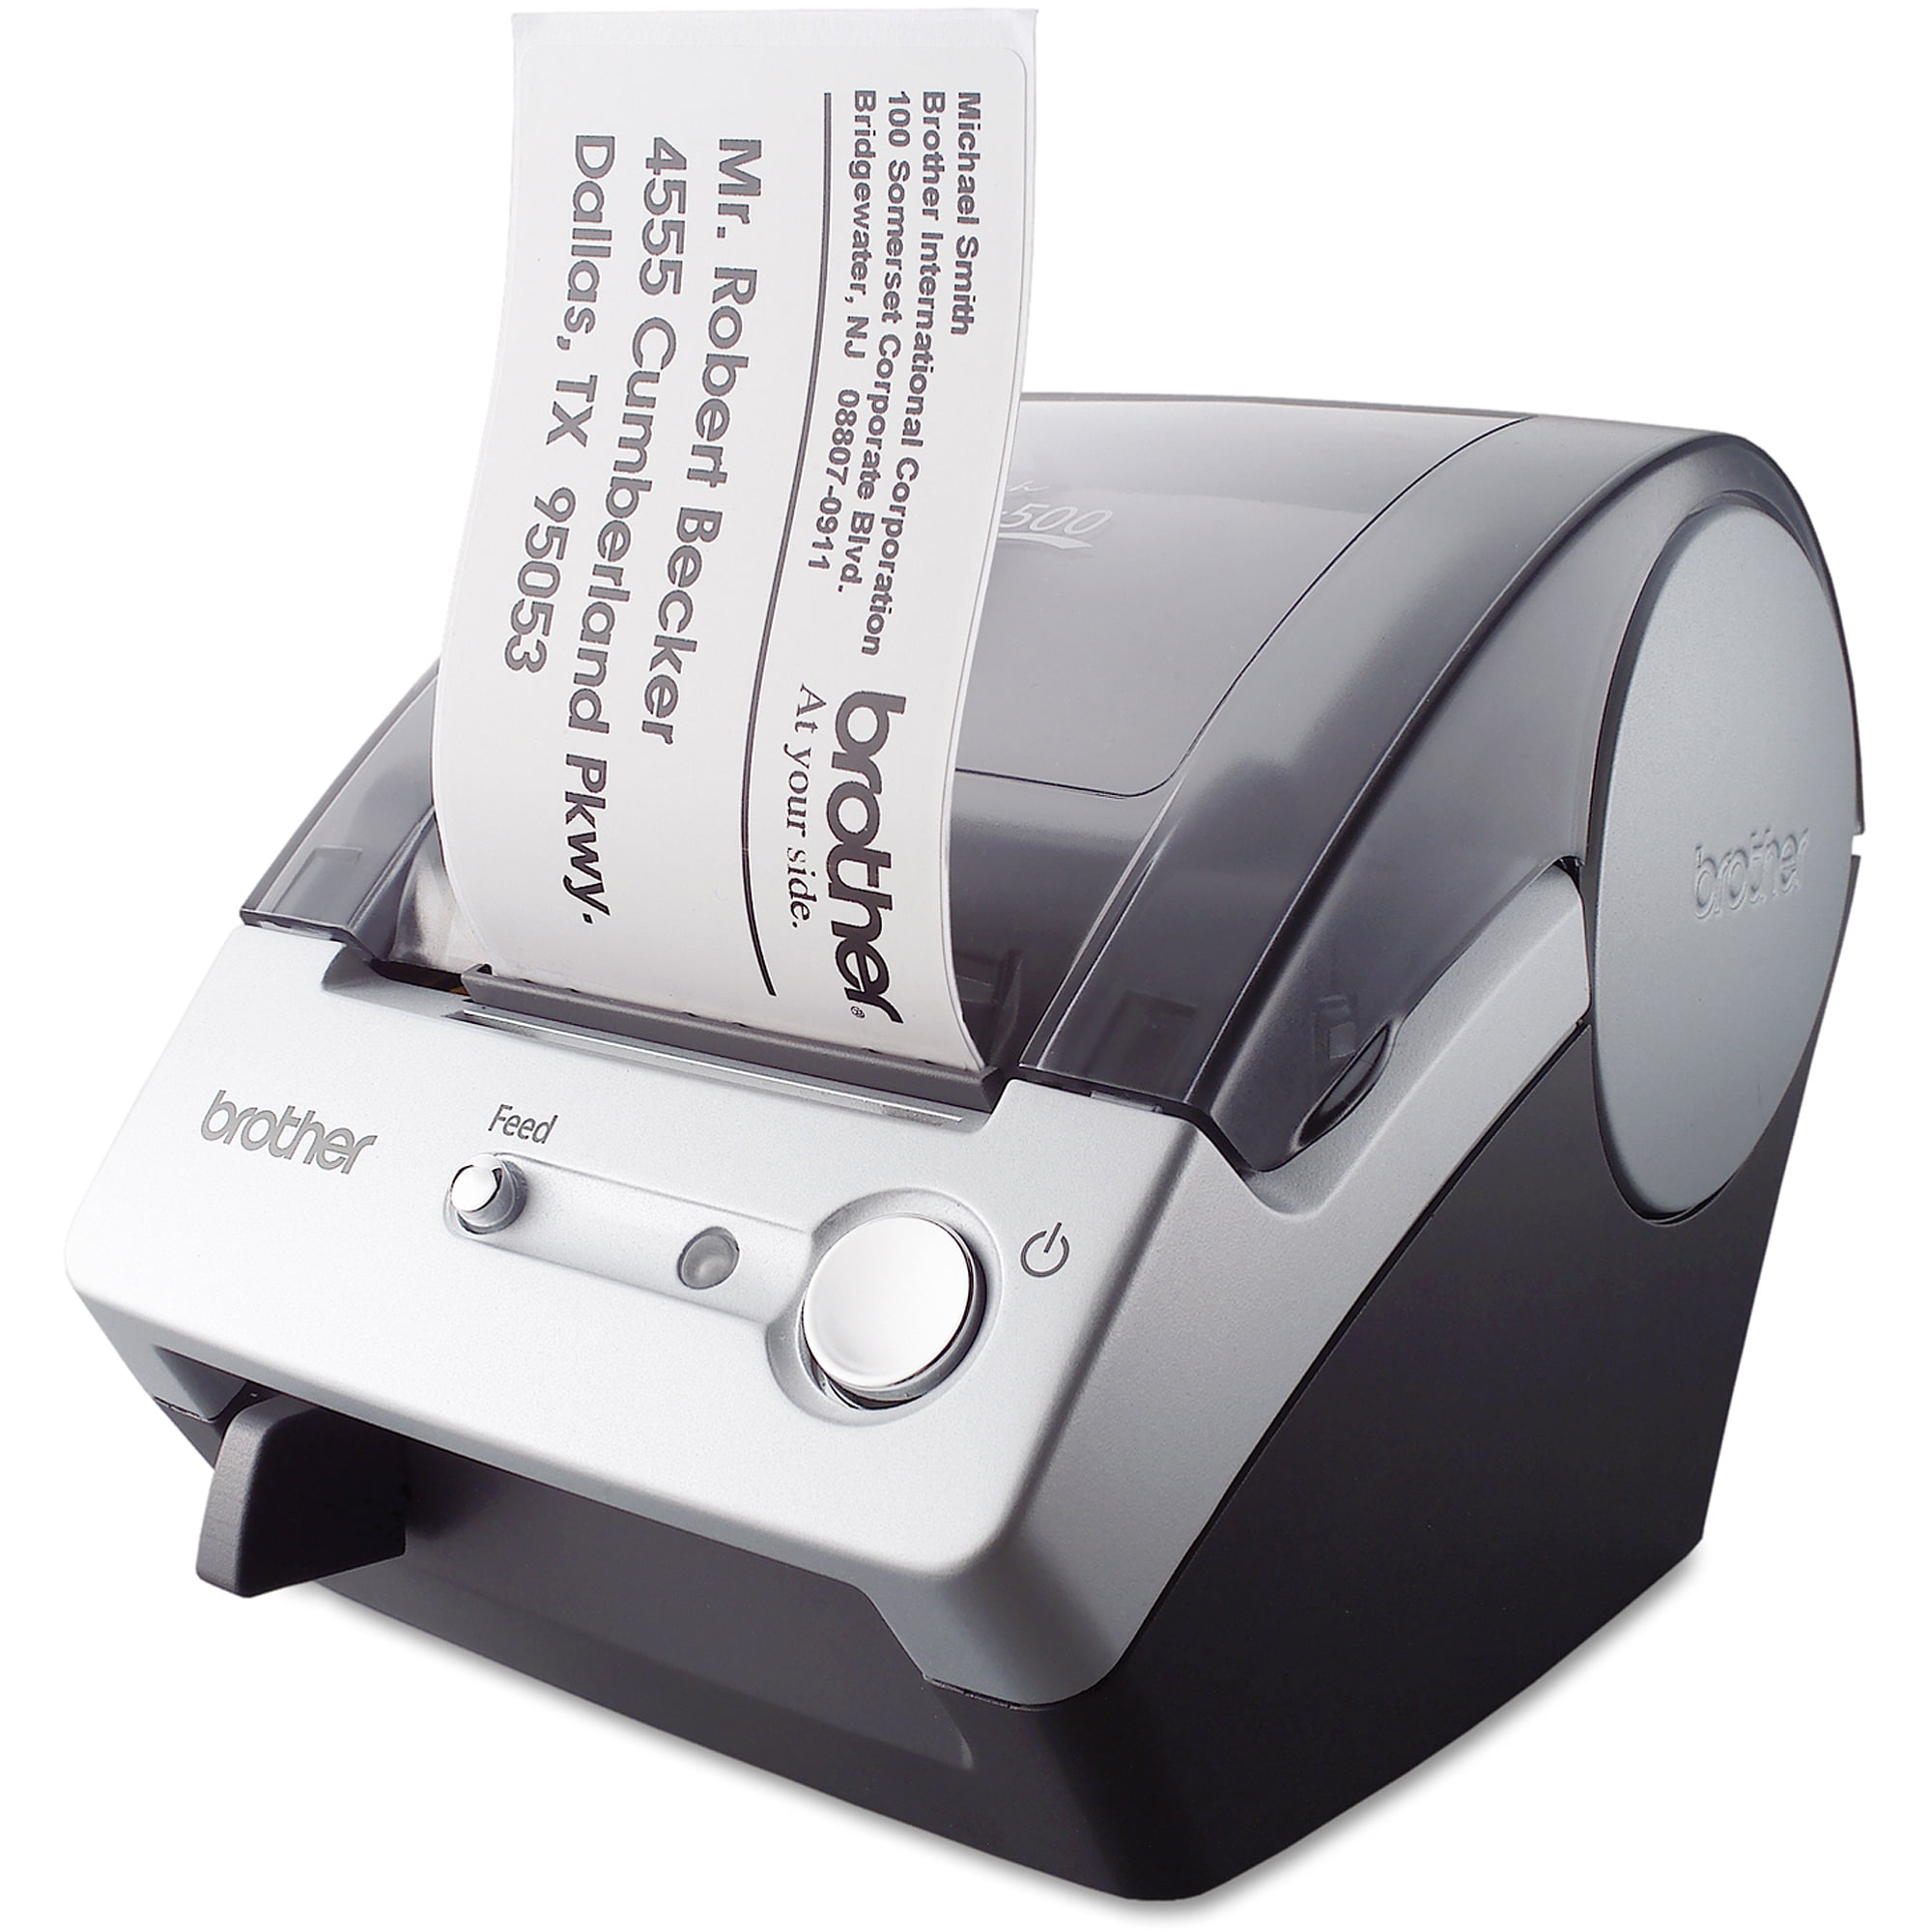 4 inch label printer for filemaker pro mac